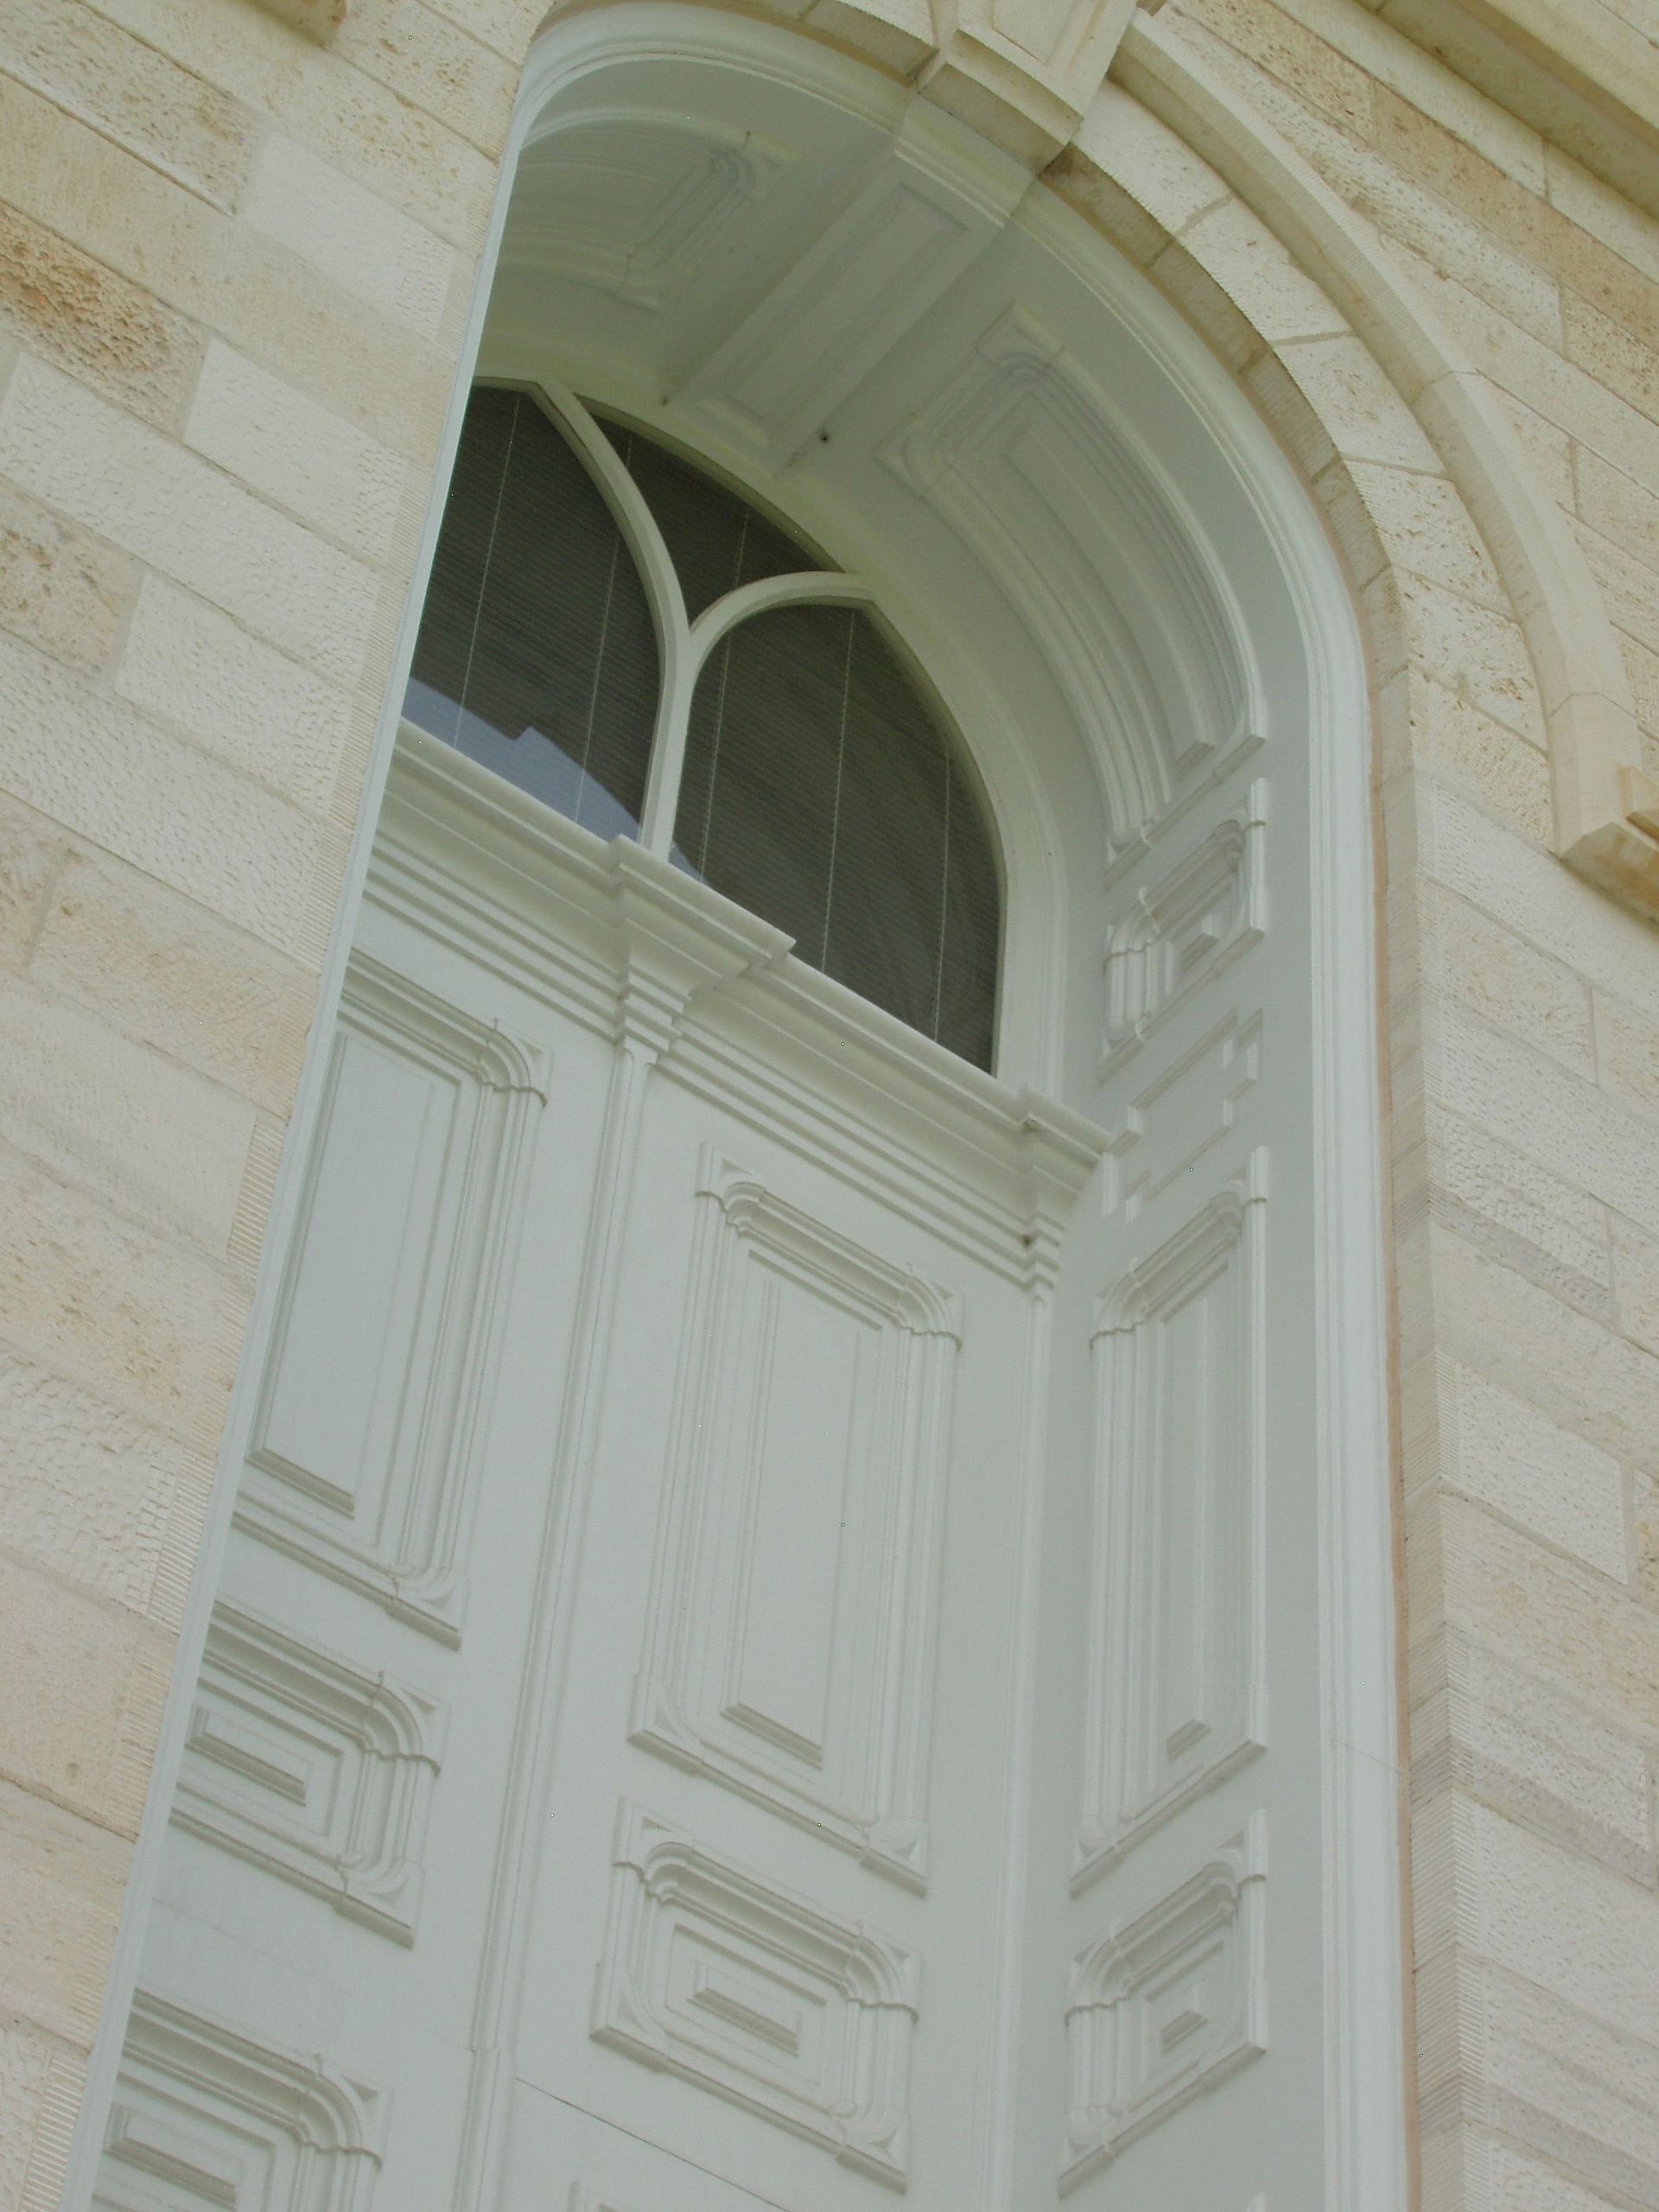 The Manti Utah Temple door, including windows.